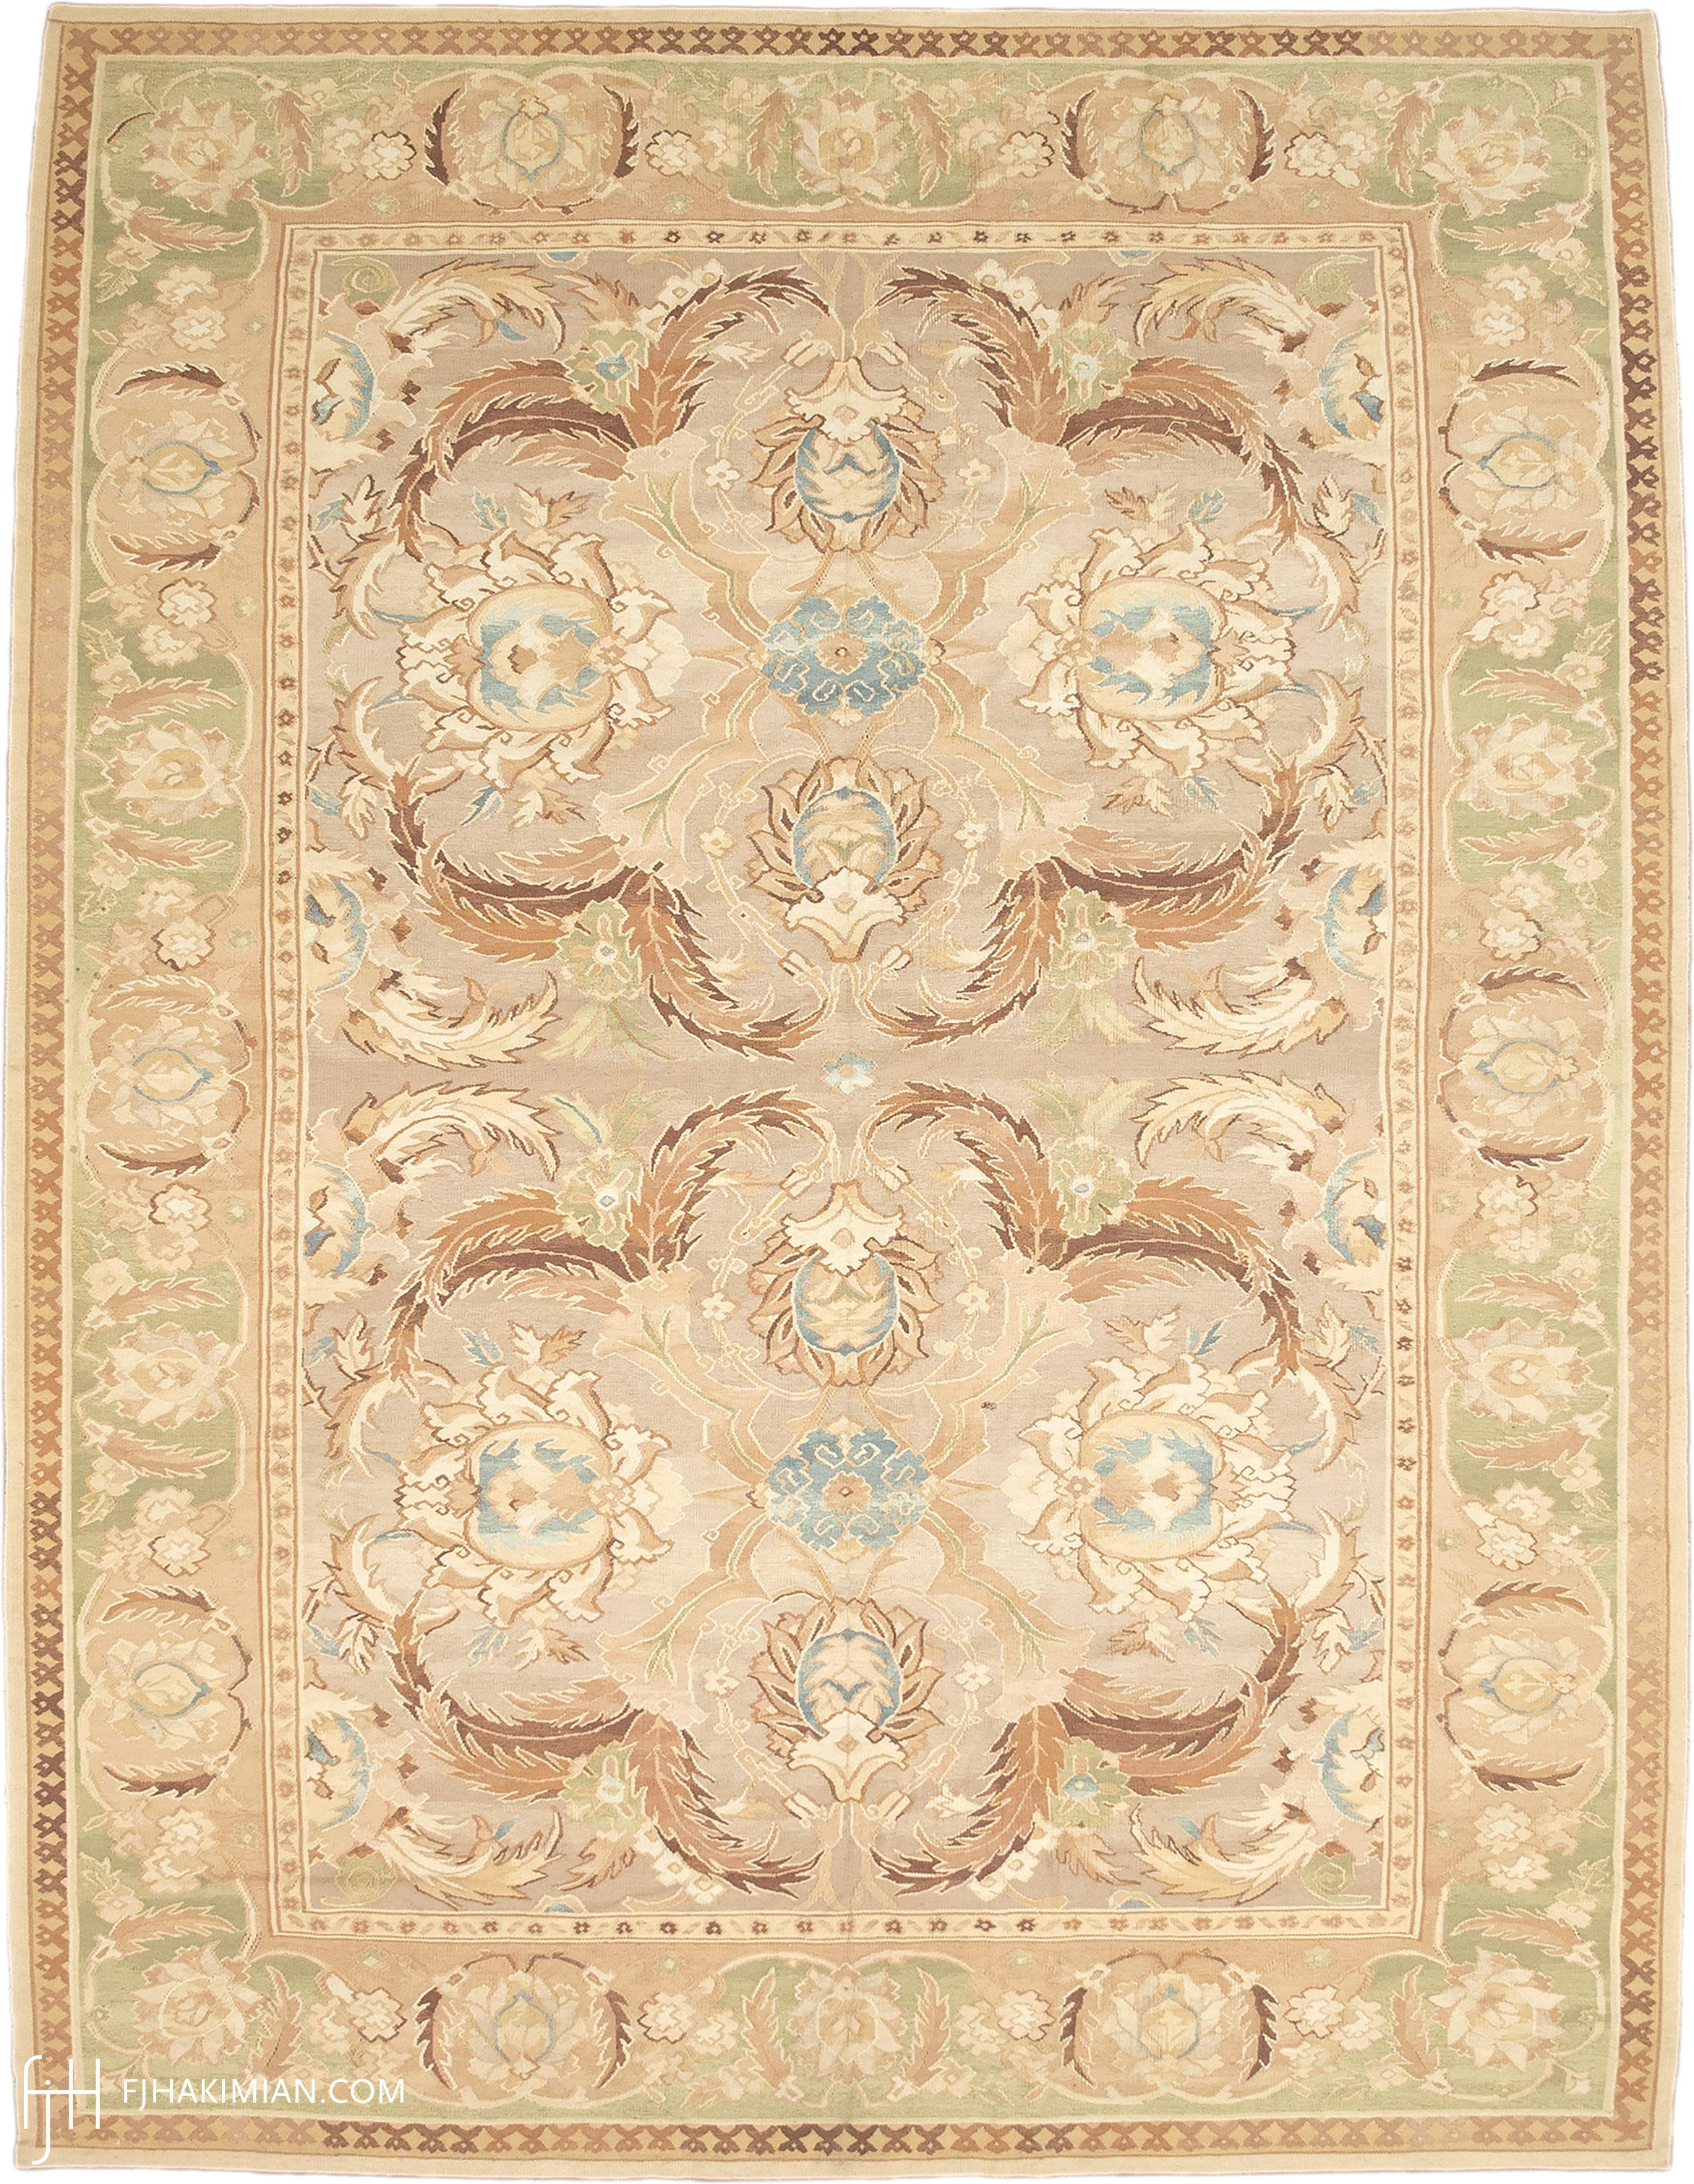 16442 Dune Design | Custom Traditional Design Carpet | FJ Hakimian | Carpet Gallery in NYC